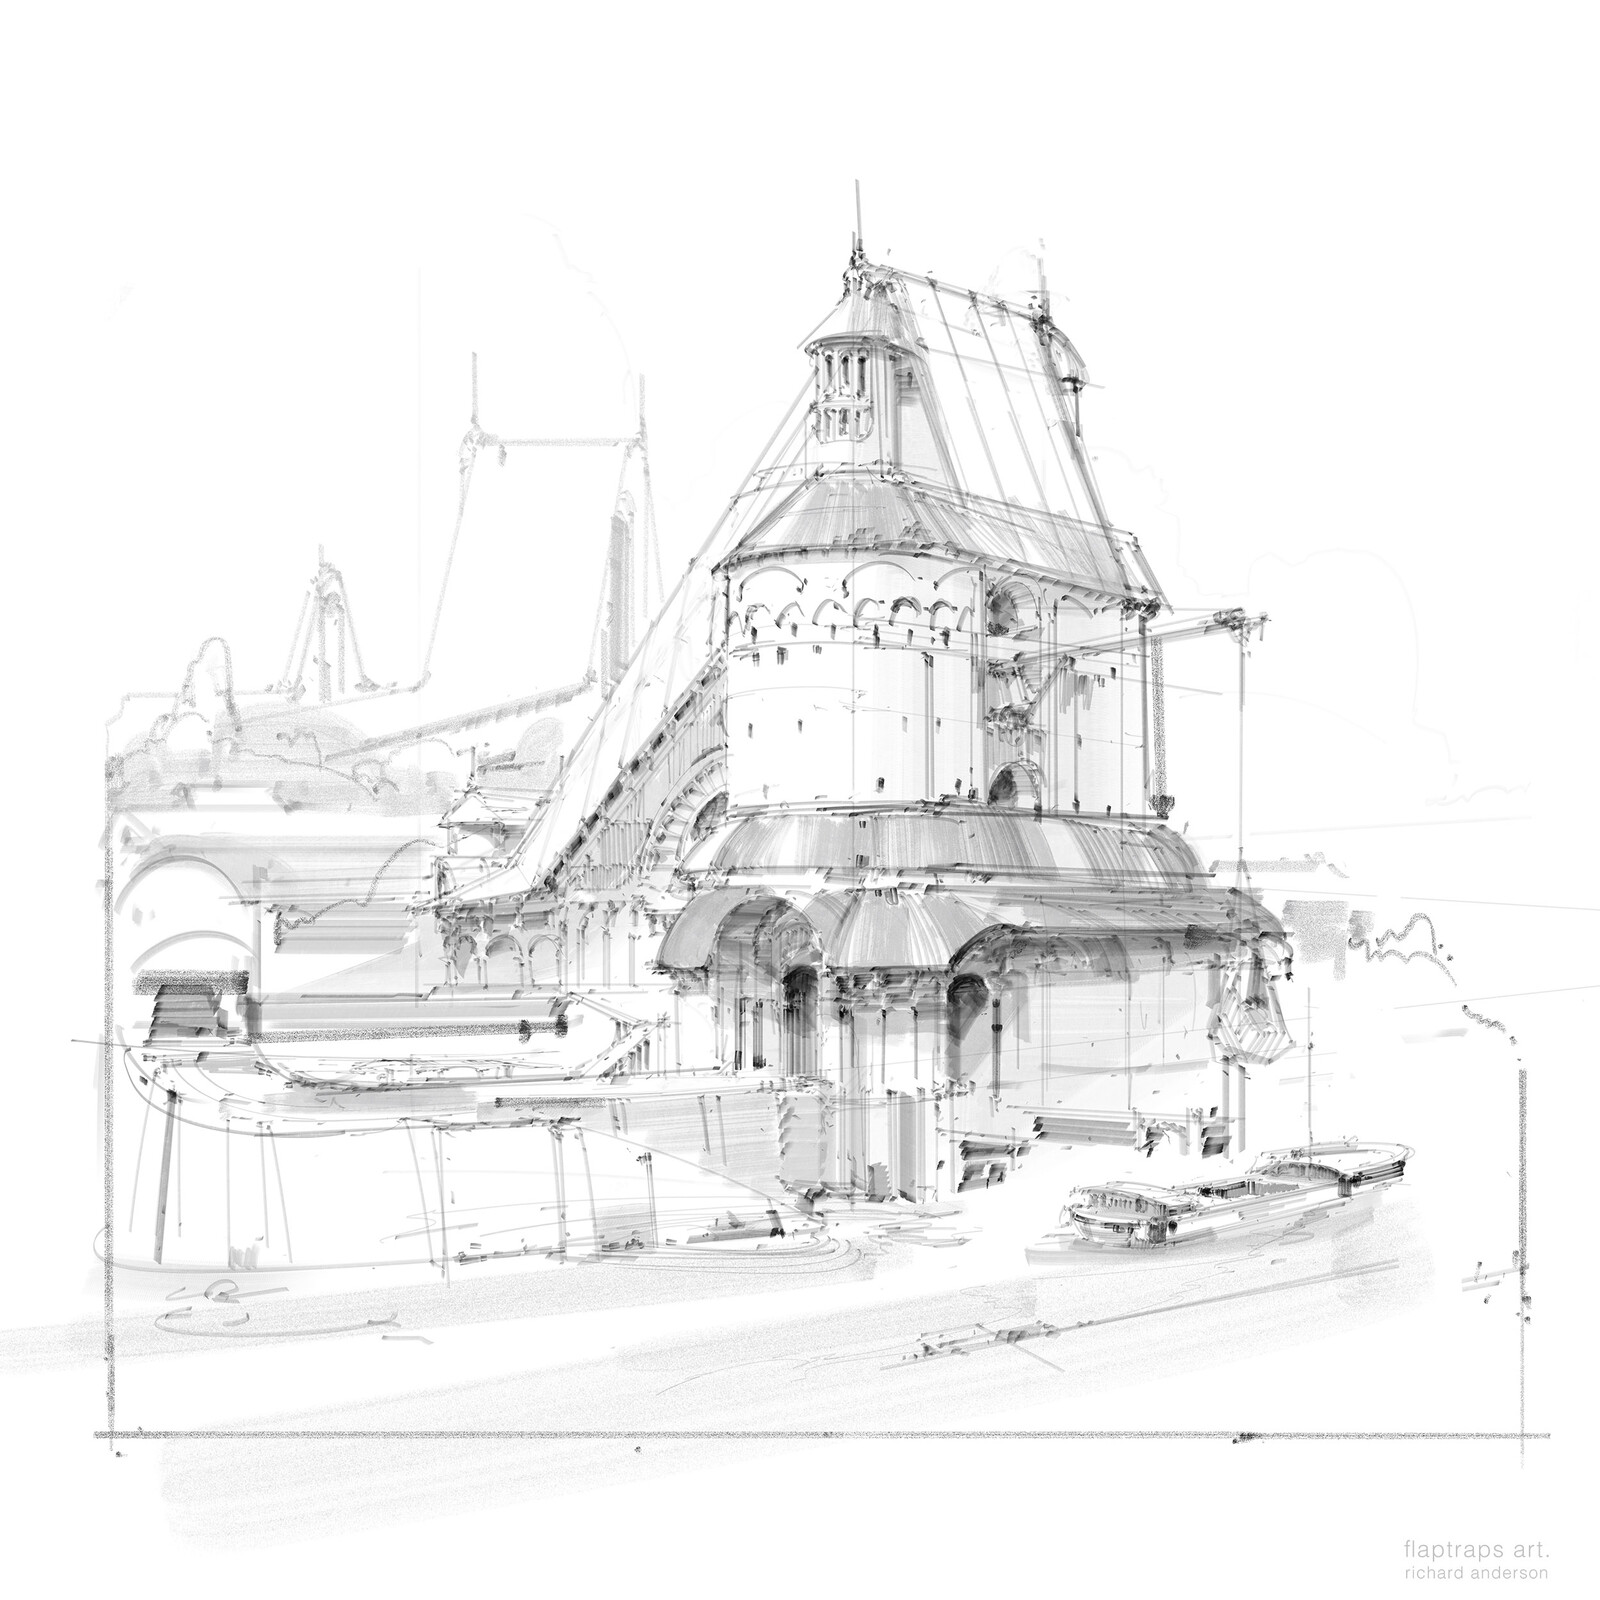 Architecture concept sketches